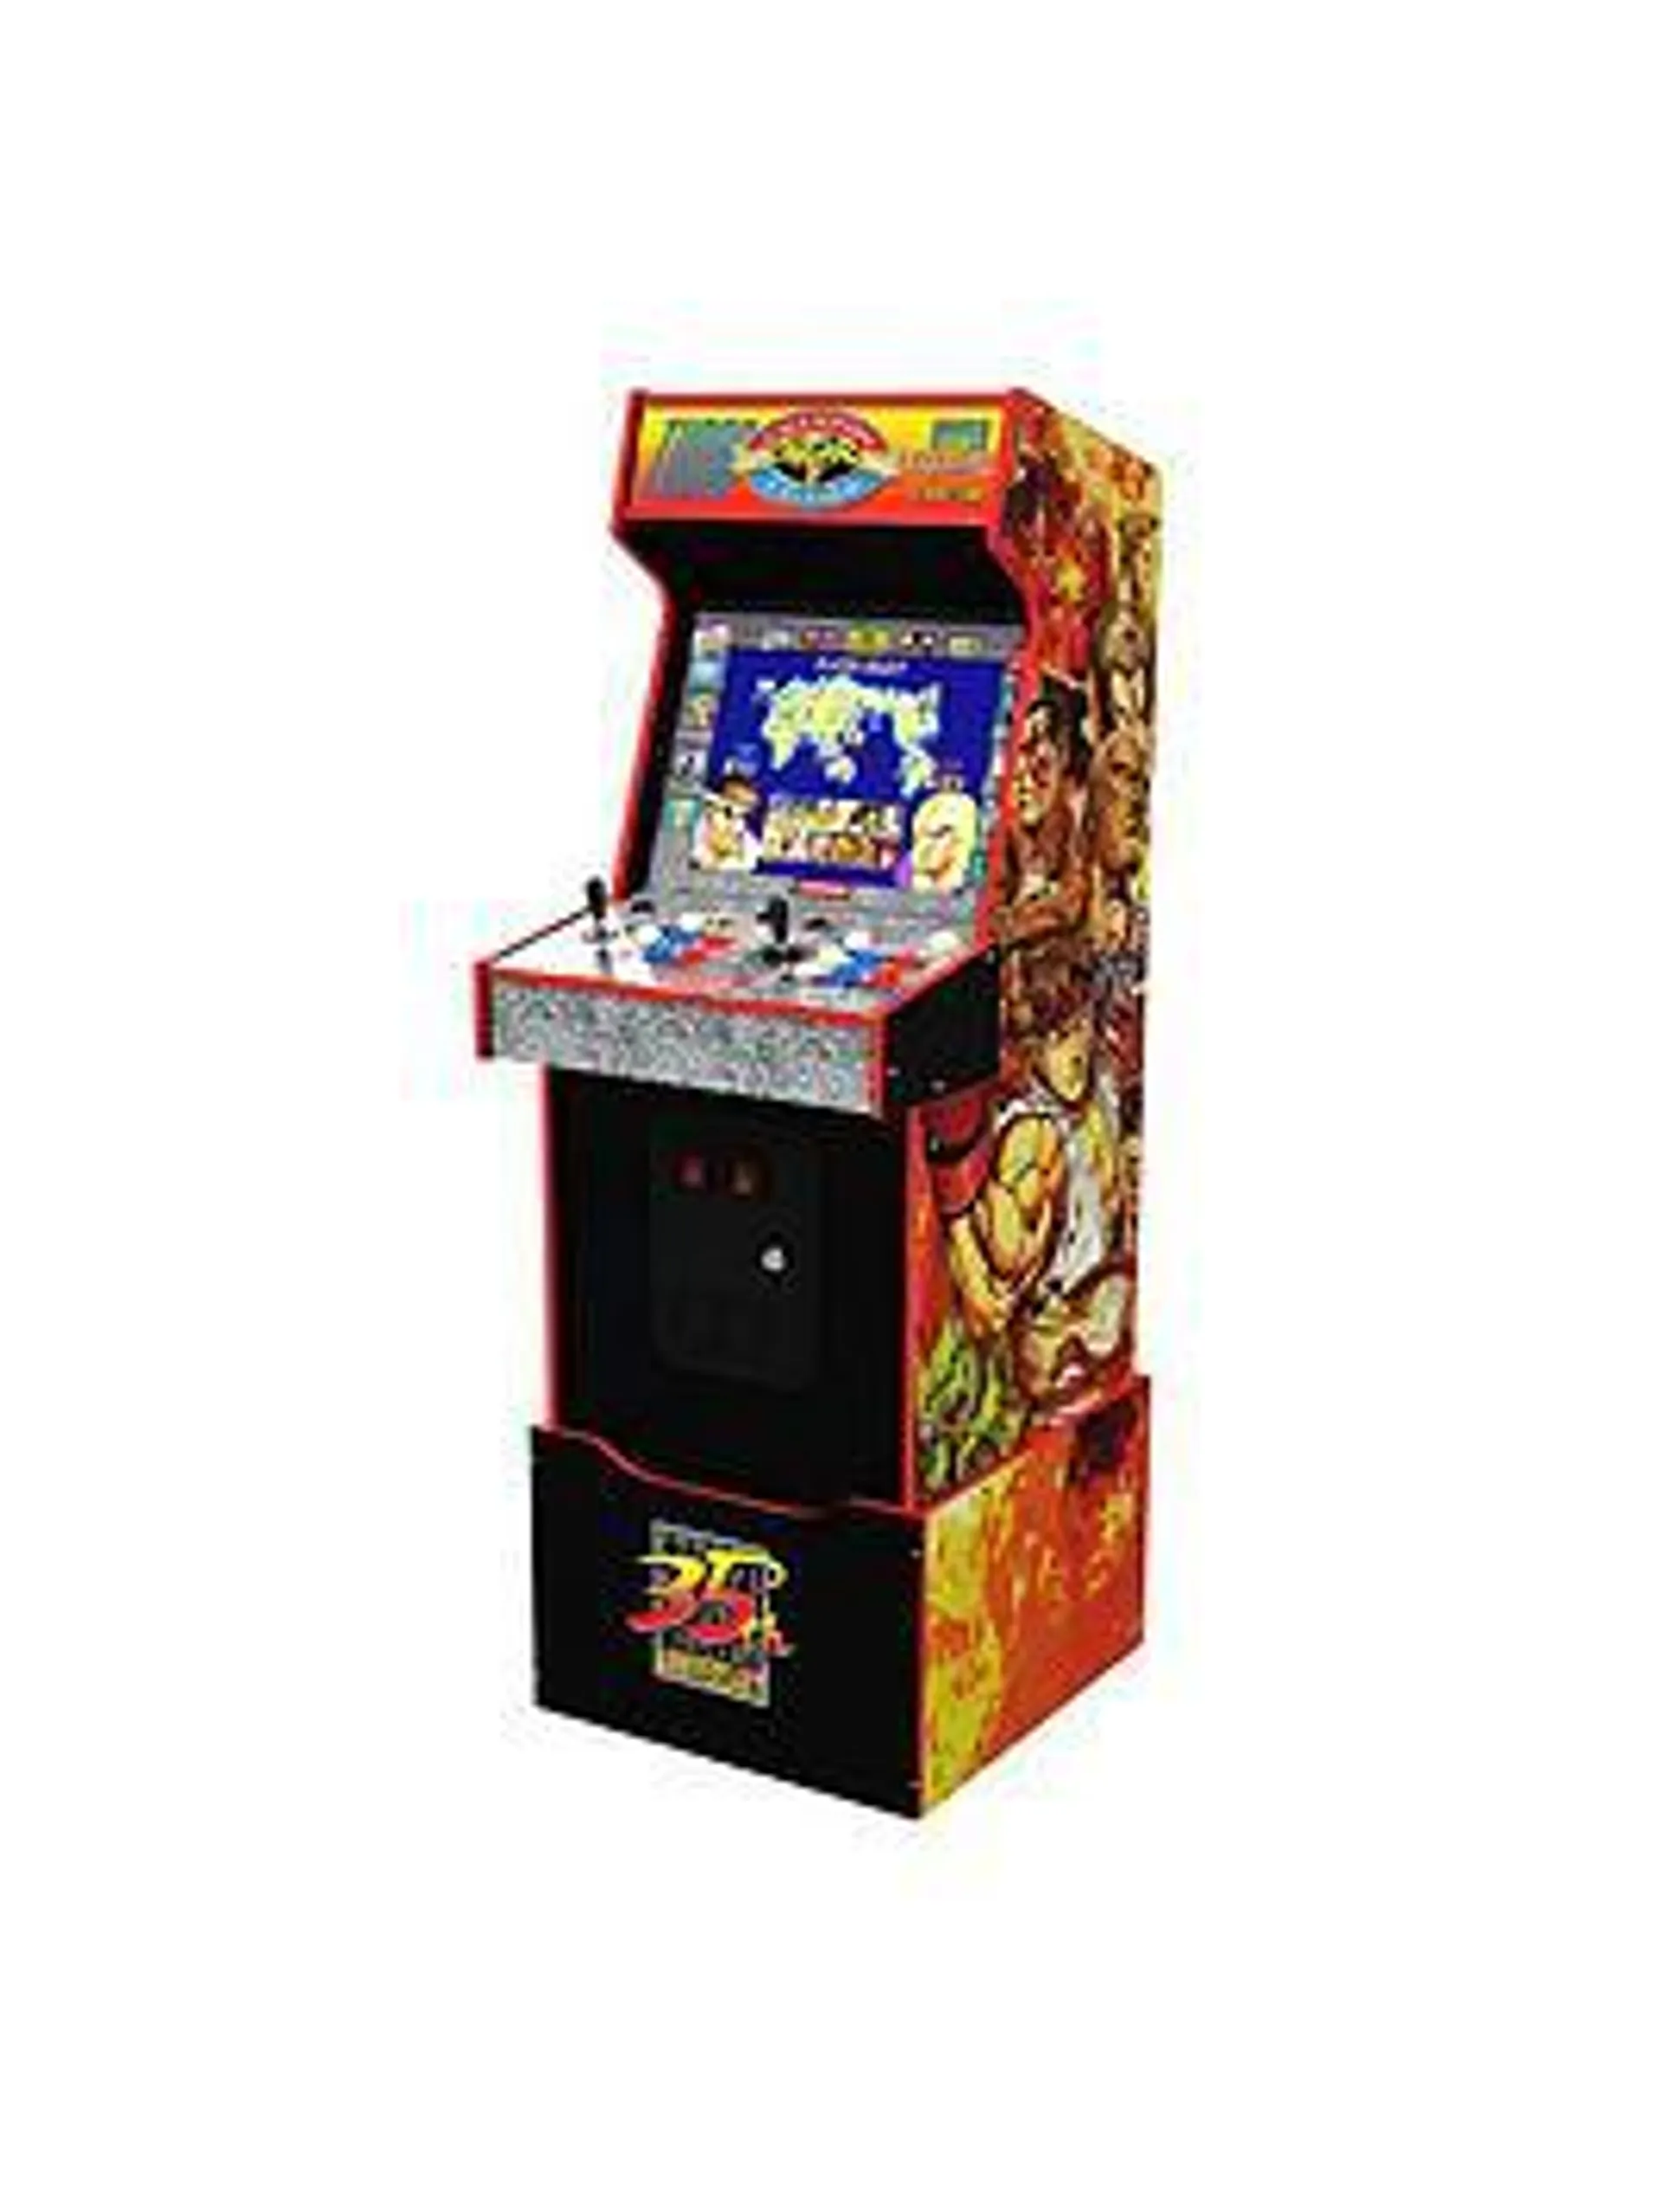 Turbo Street Fighter 14-in-1 Wifi Legacy Arcade Machine